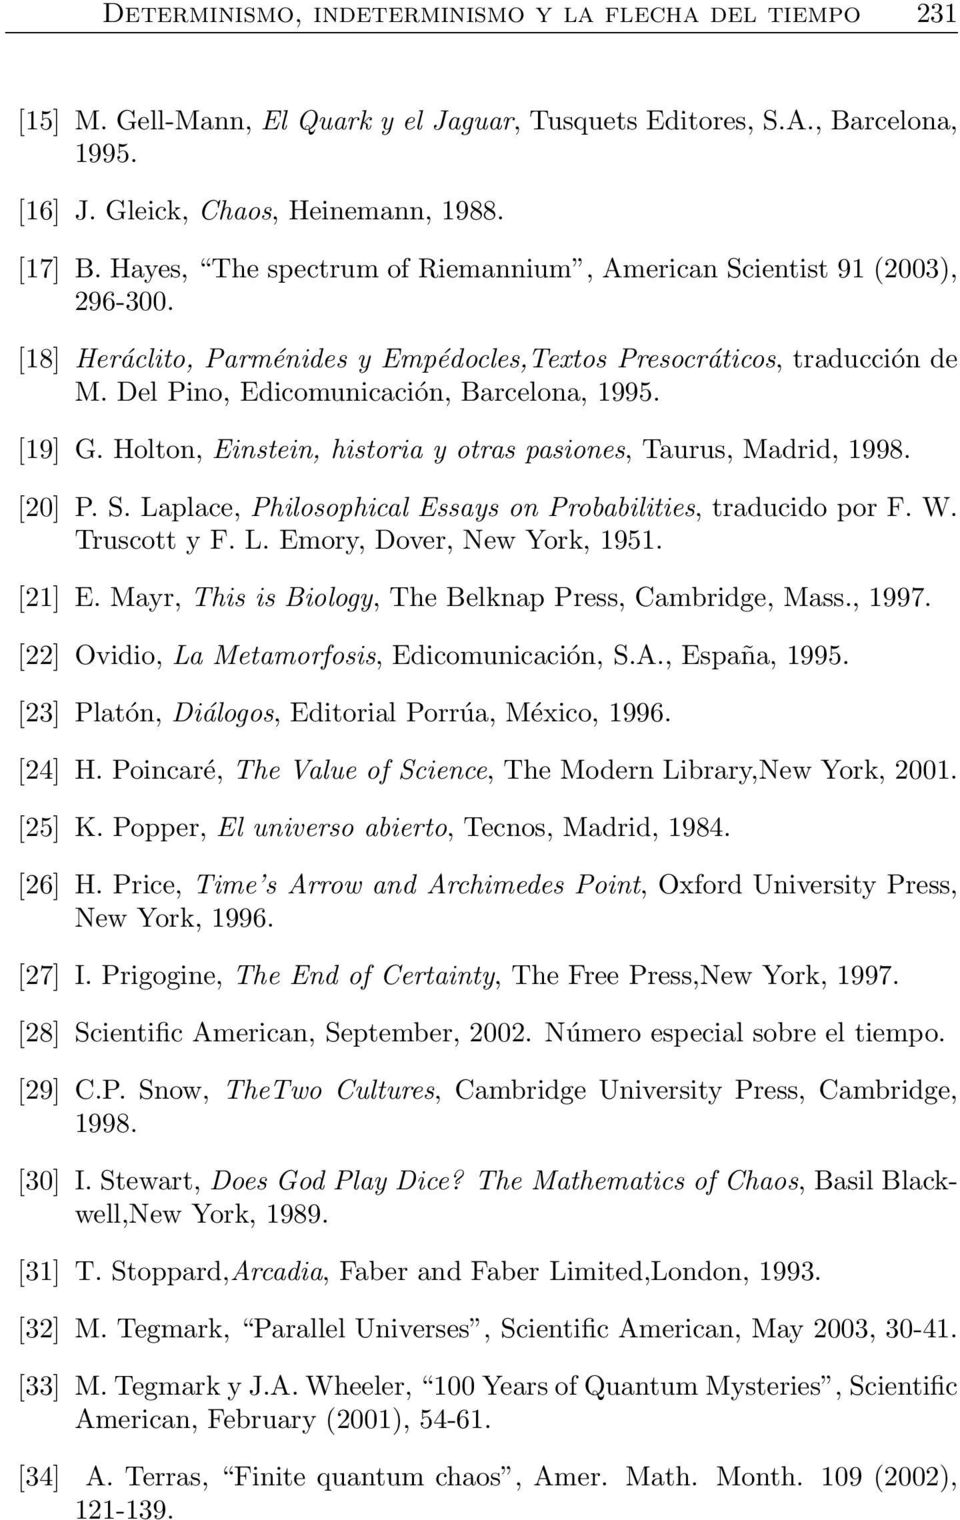 [19] G. Holton, Einstein, historia y otras pasiones, Taurus, Madrid, 1998. [20] P. S. Laplace, Philosophical Essays on Probabilities, traducido por F. W. Truscott y F. L. Emory, Dover, New York, 1951.